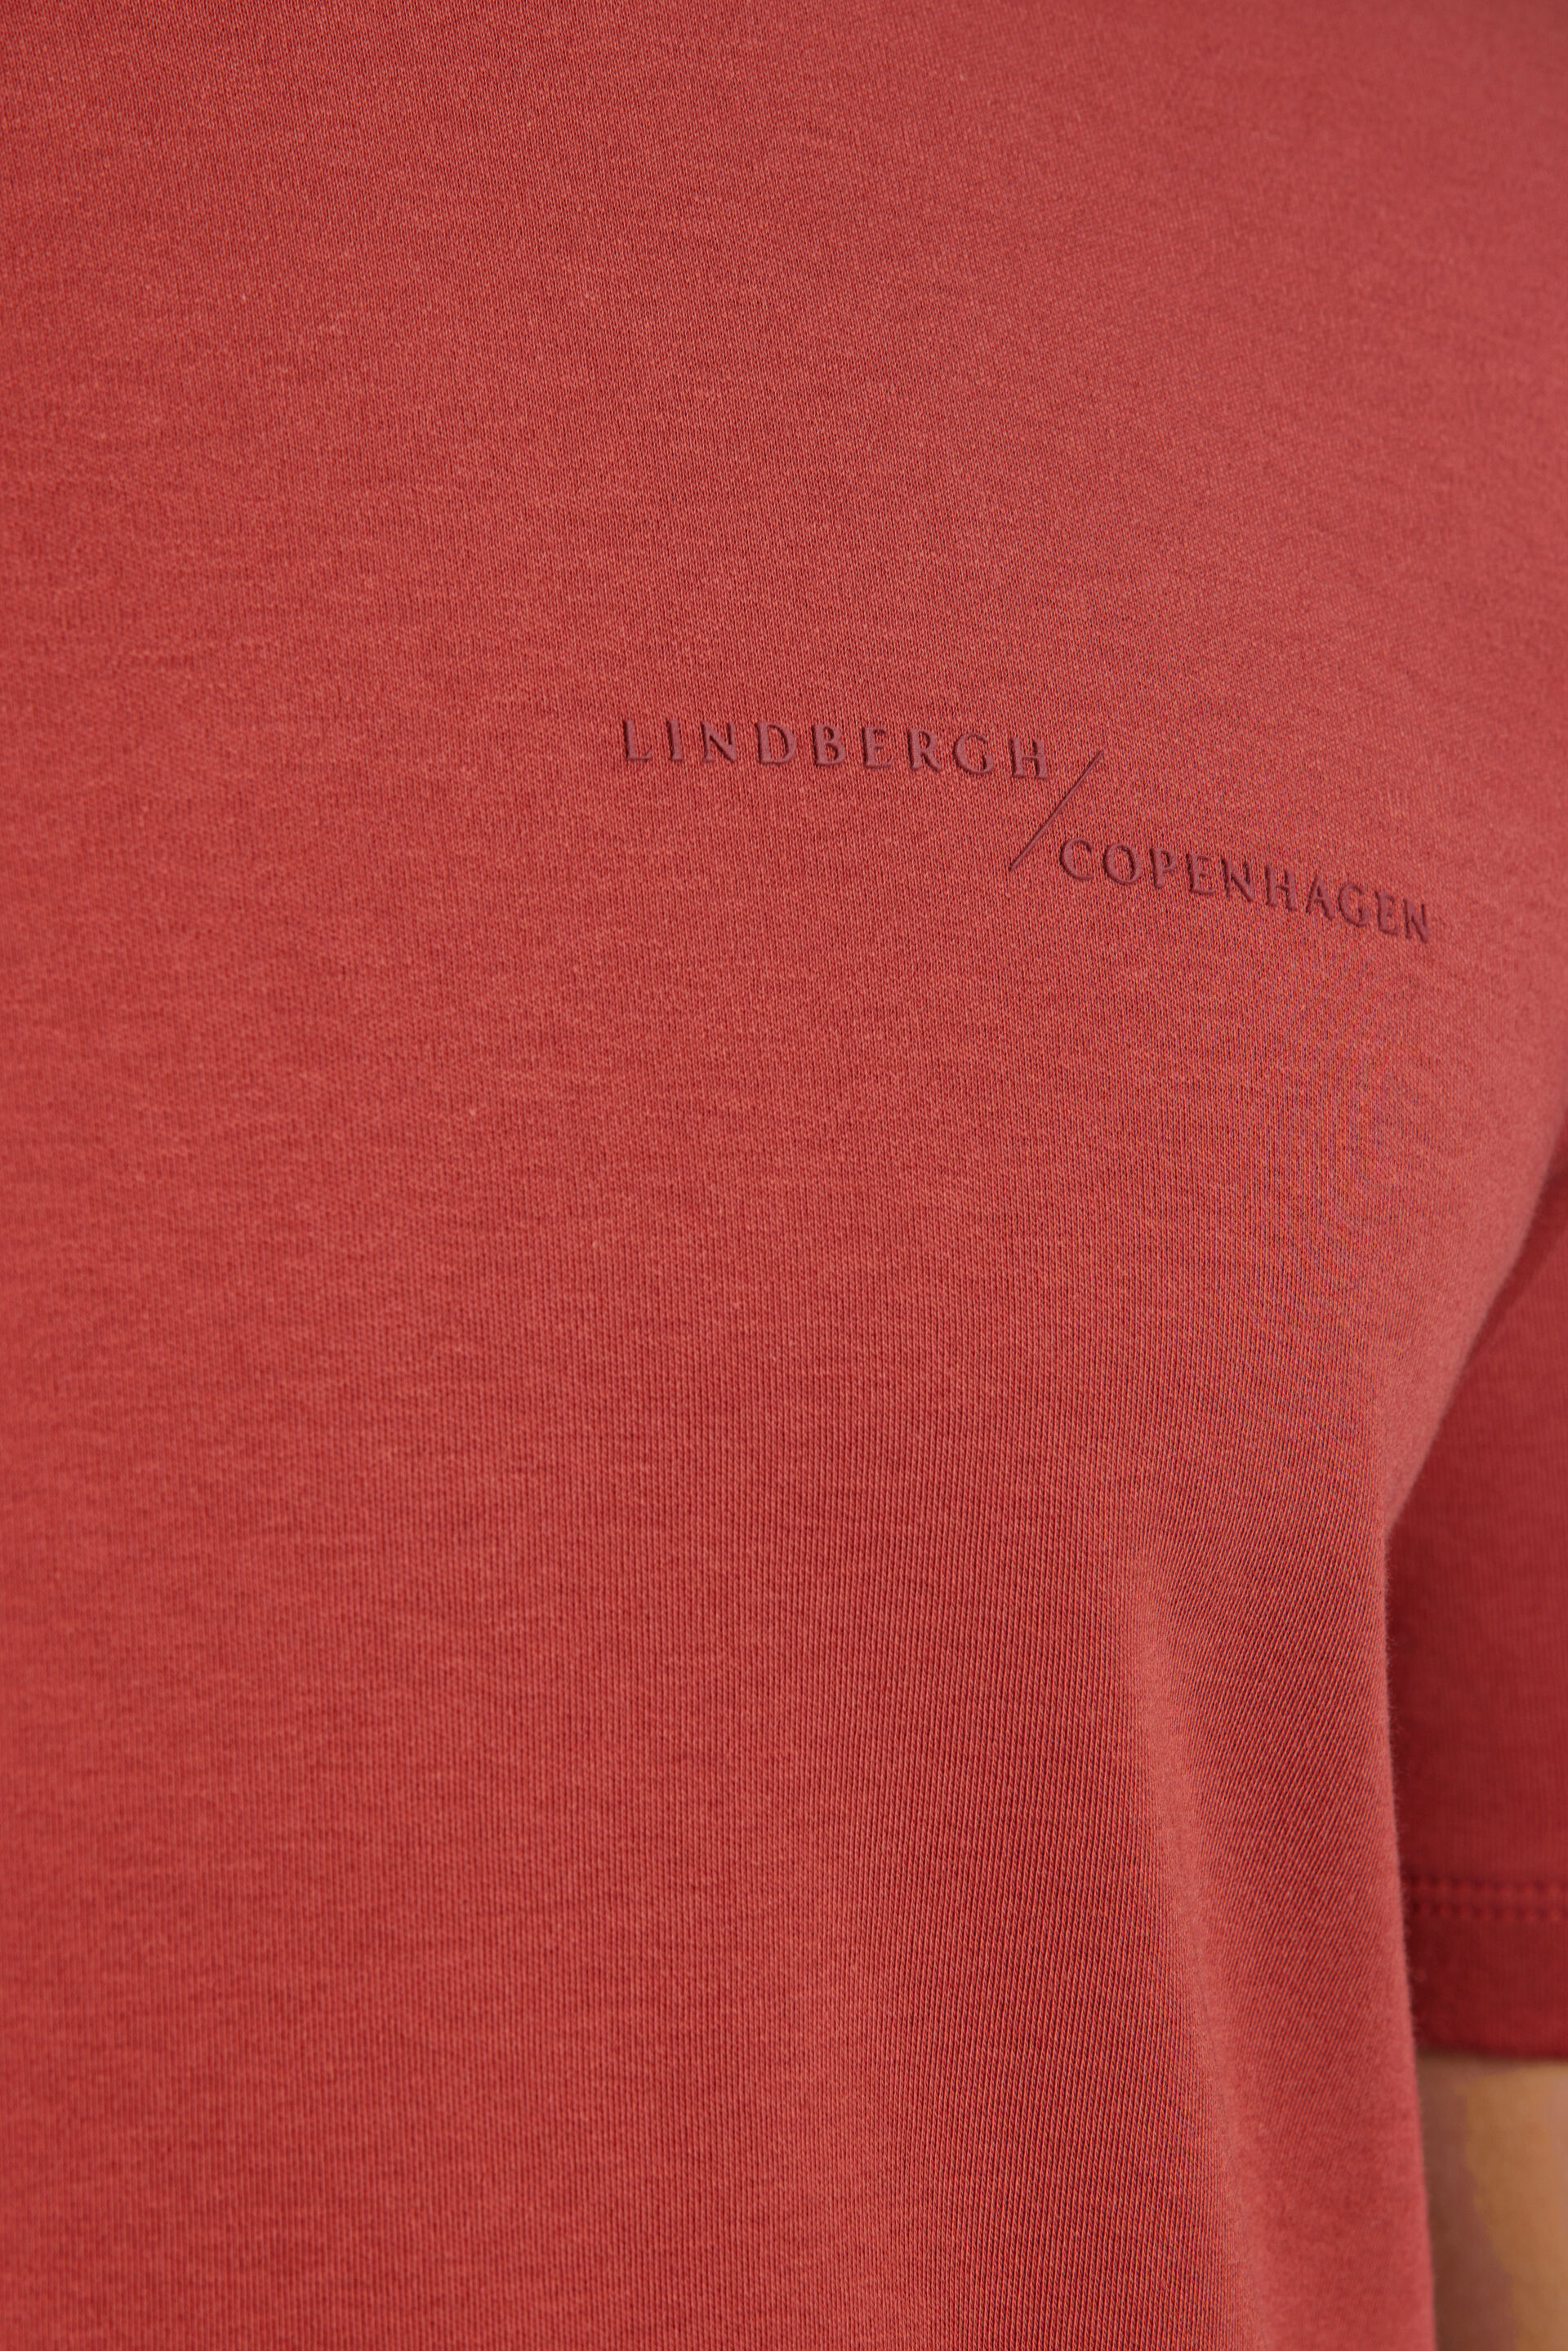 Lindbergh  T-shirt 30-400238